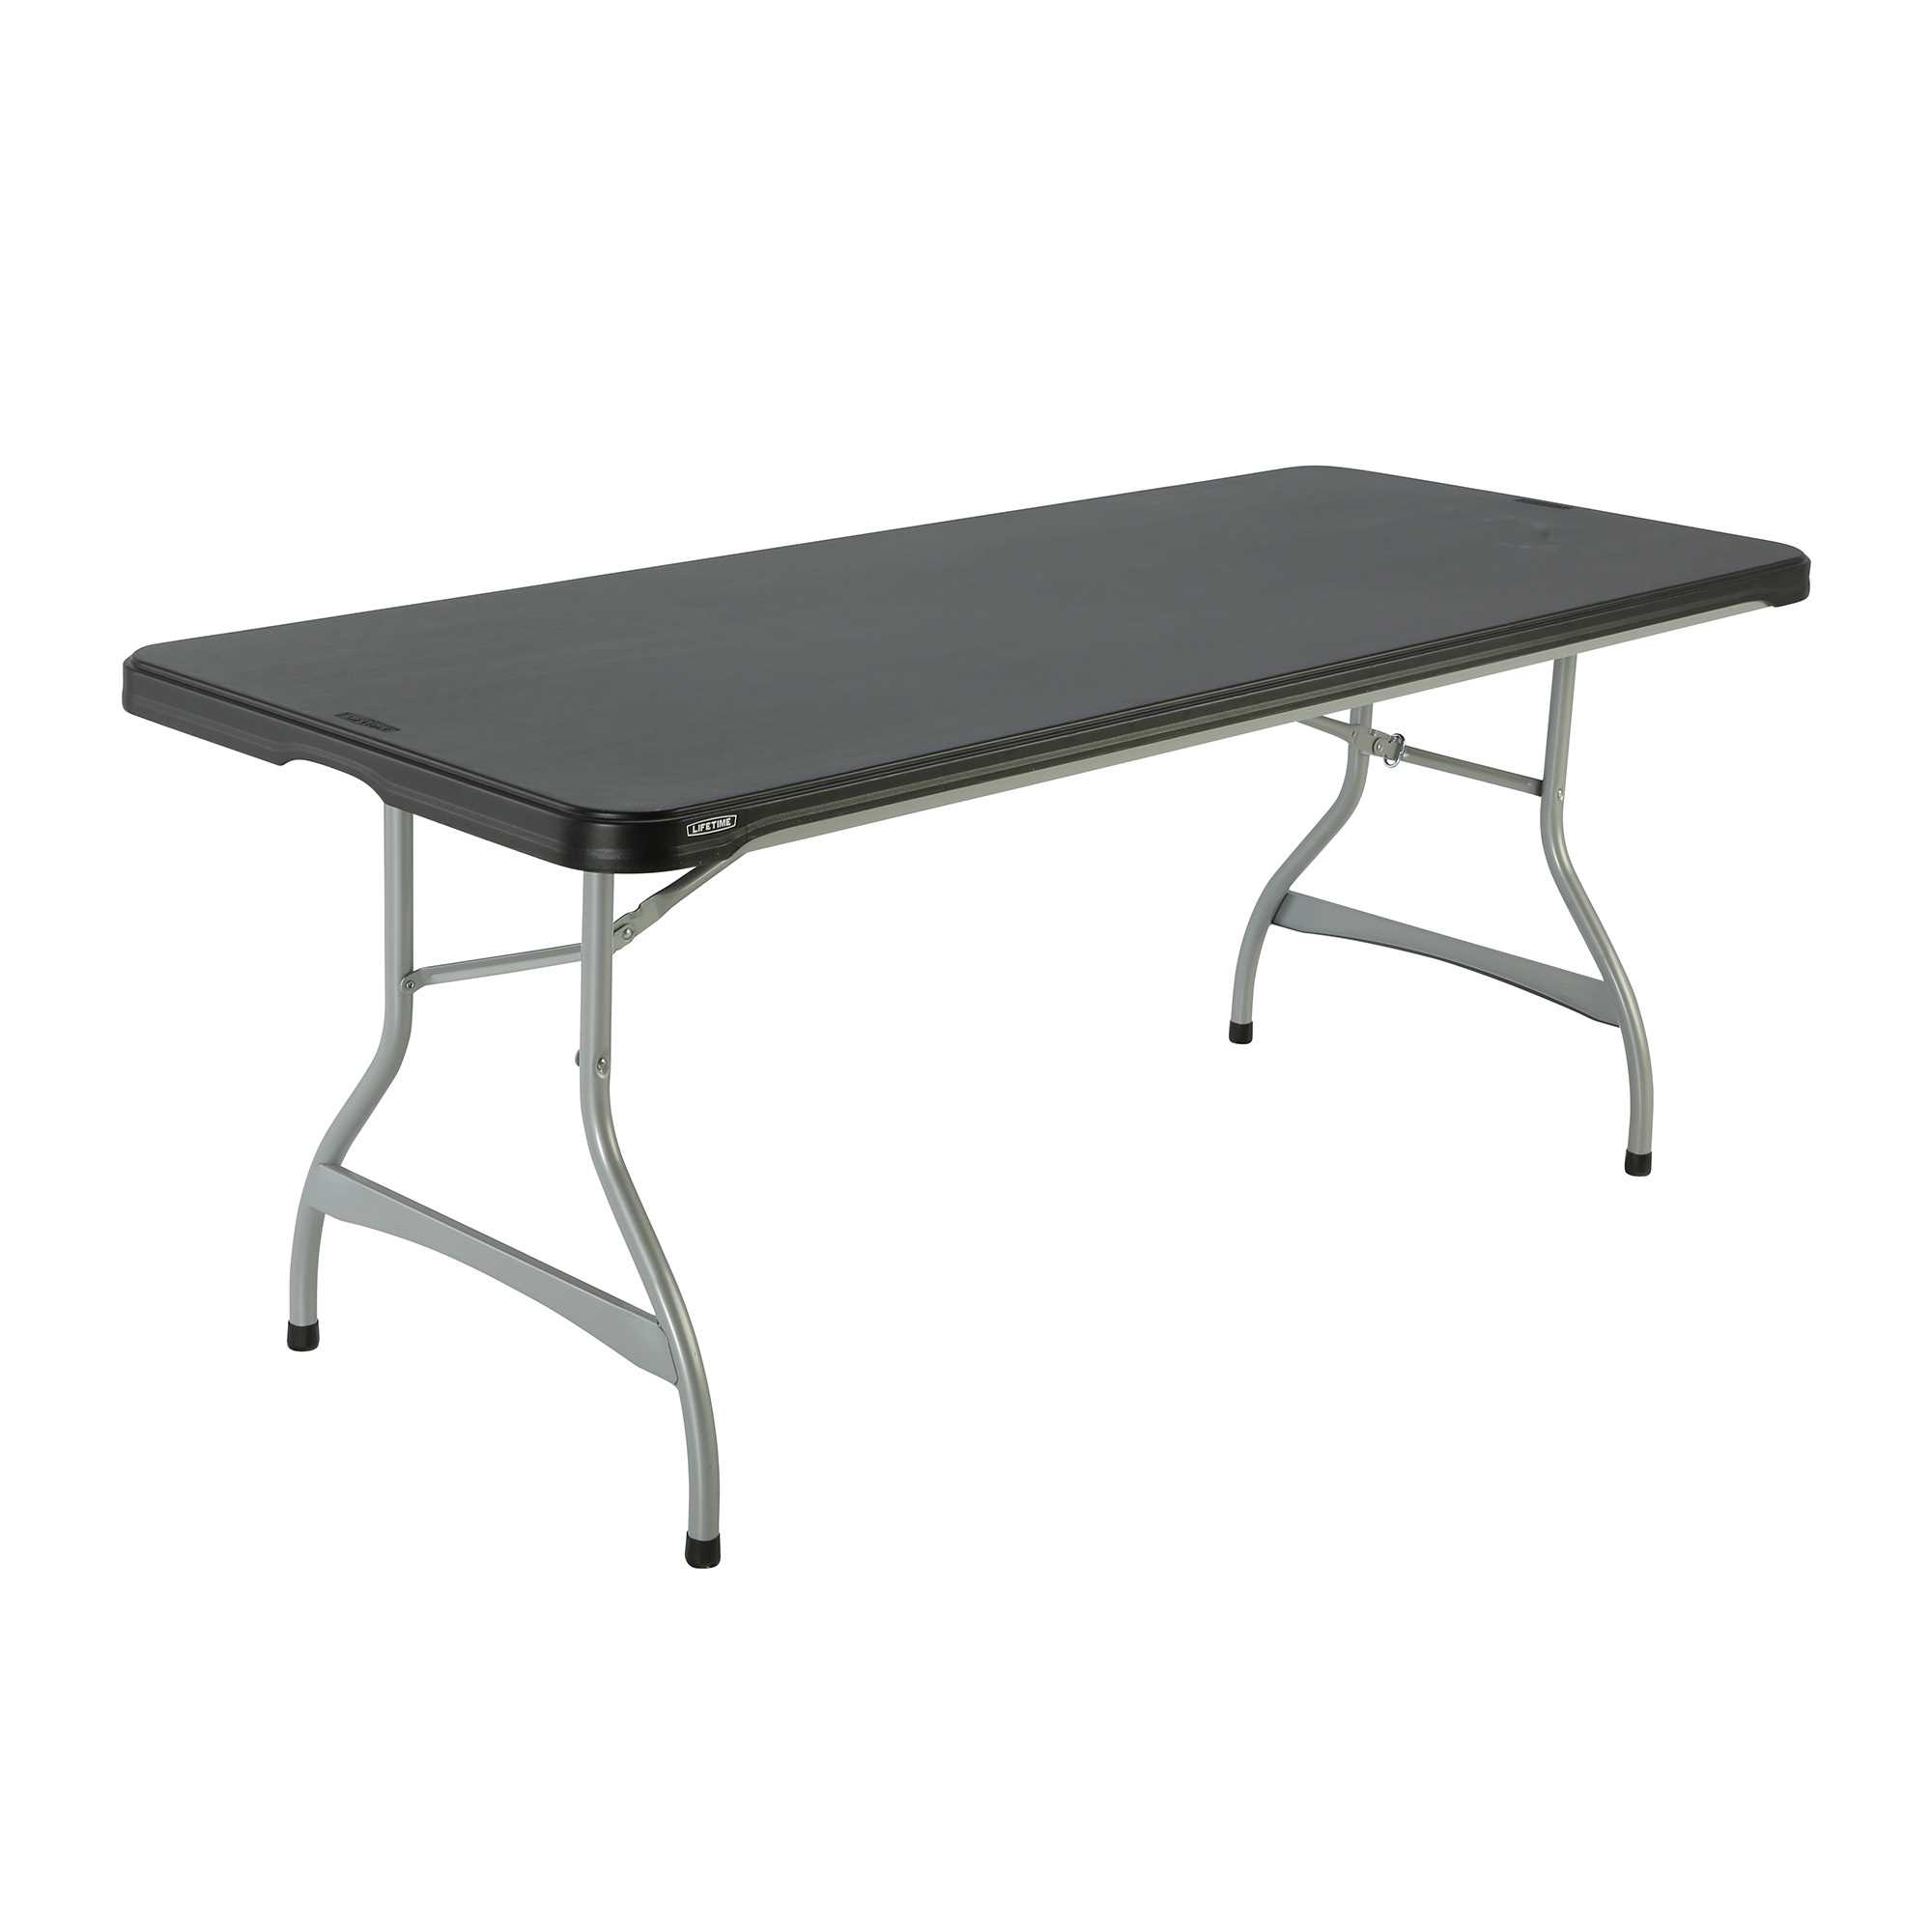 Rectangular table 183cm black